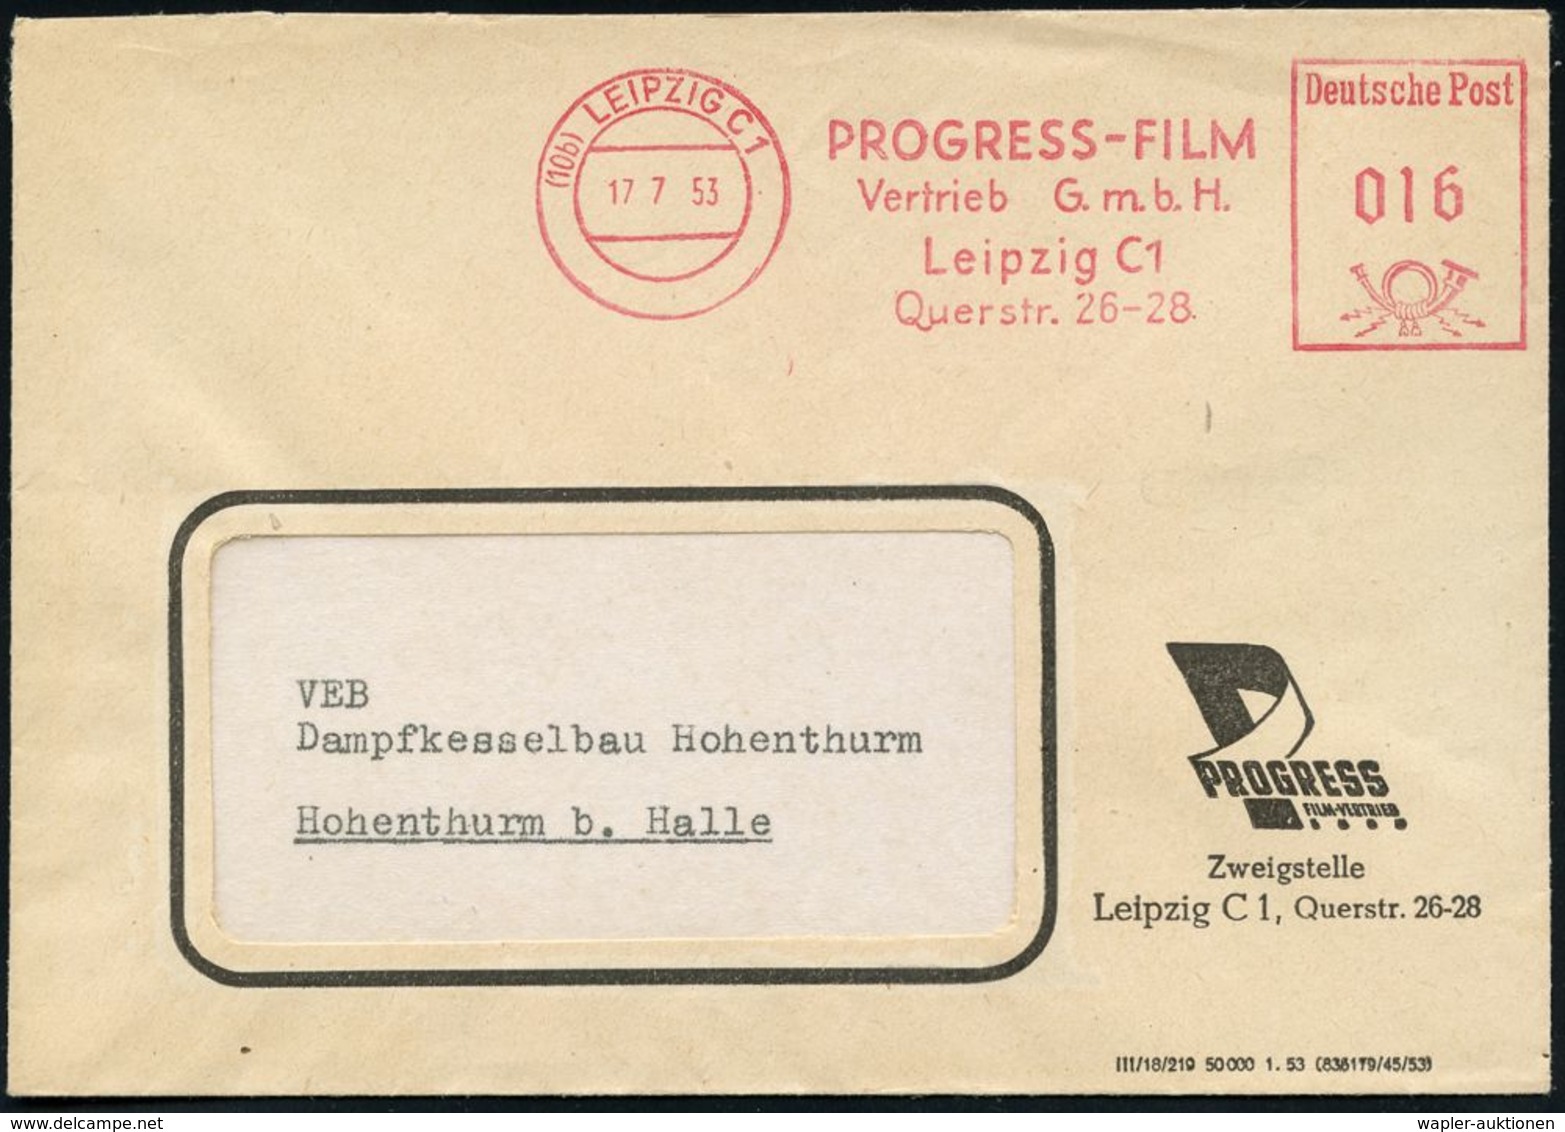 FILM / FILMVERLEIH / FILMTITEL / KINO : (10b) LEIPZIG C1/ PROGRESS-FILM/ Vertriebs GmbH/ ..Querstr. 26-28 1953 (17.7.) A - Kino